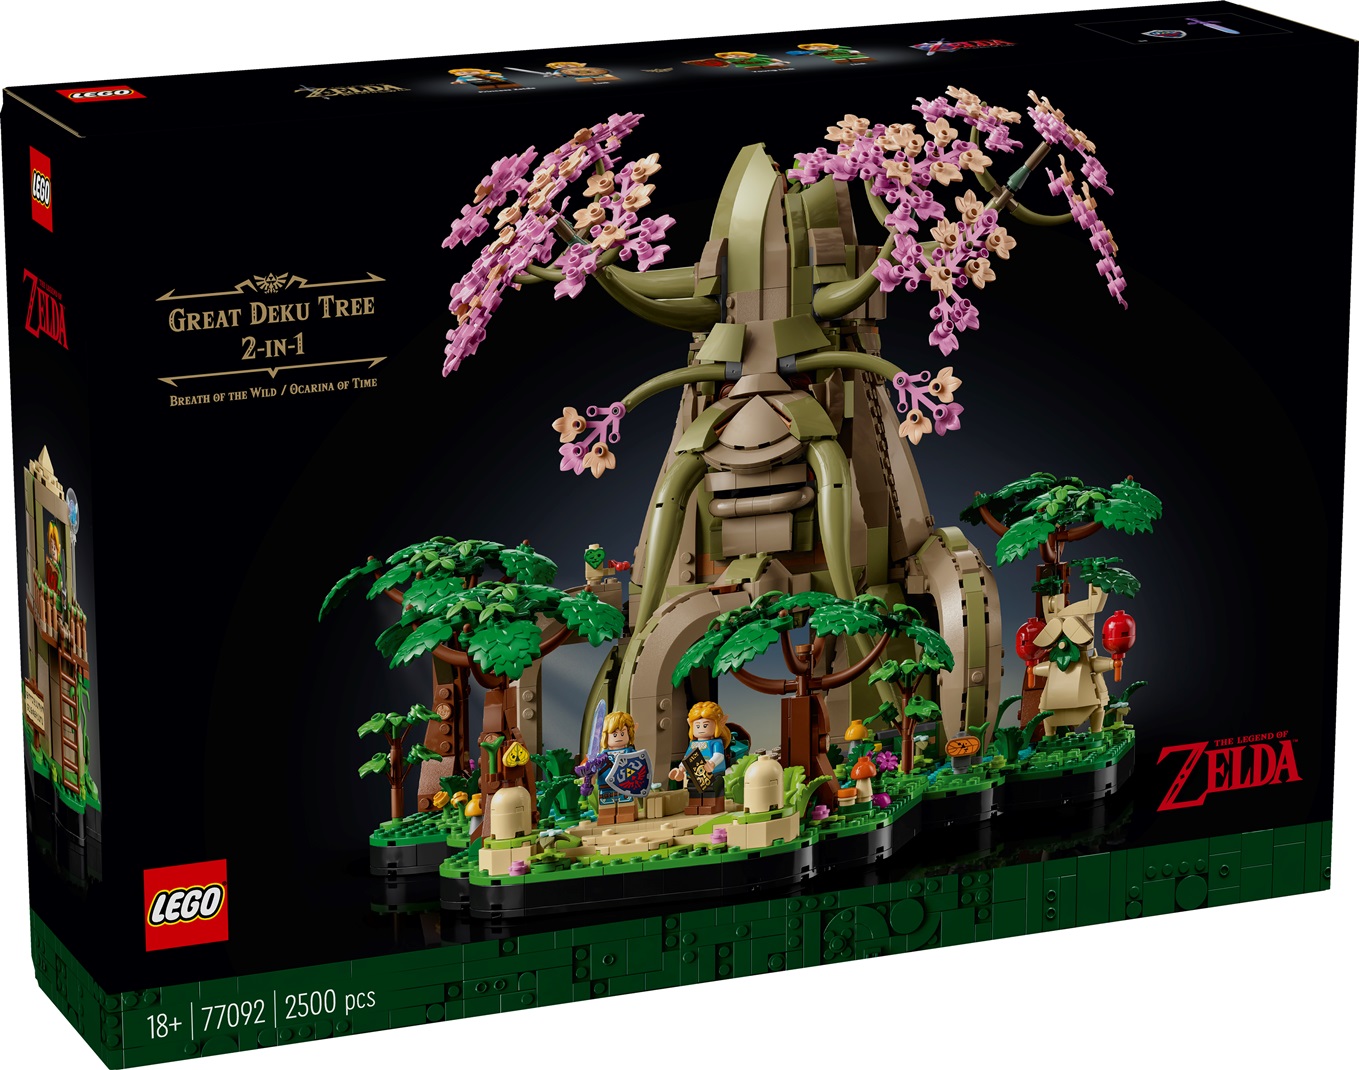 LEGO Zelda Great Deku Tree 2-in-1 Set